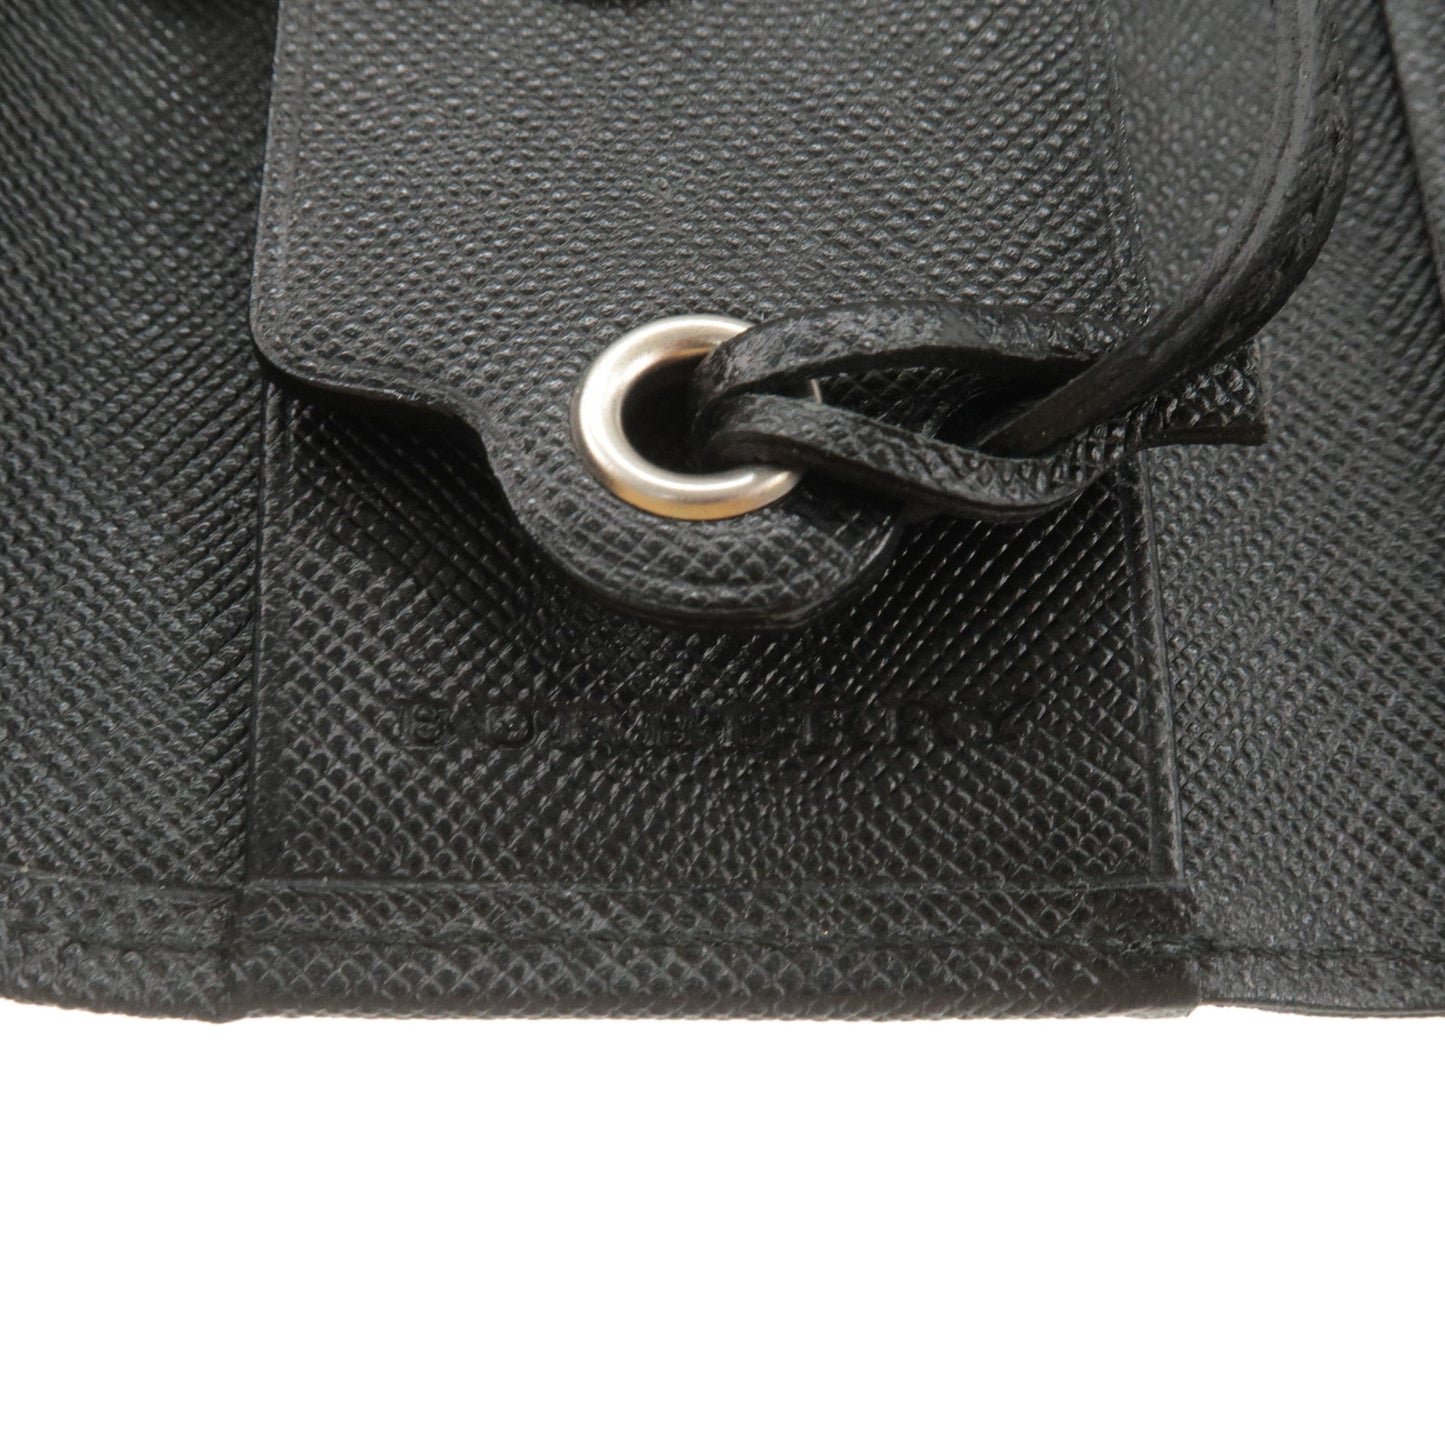 BURBERRY Leather Canvas Nova Plaid 4 Rings Key Case Black Beige